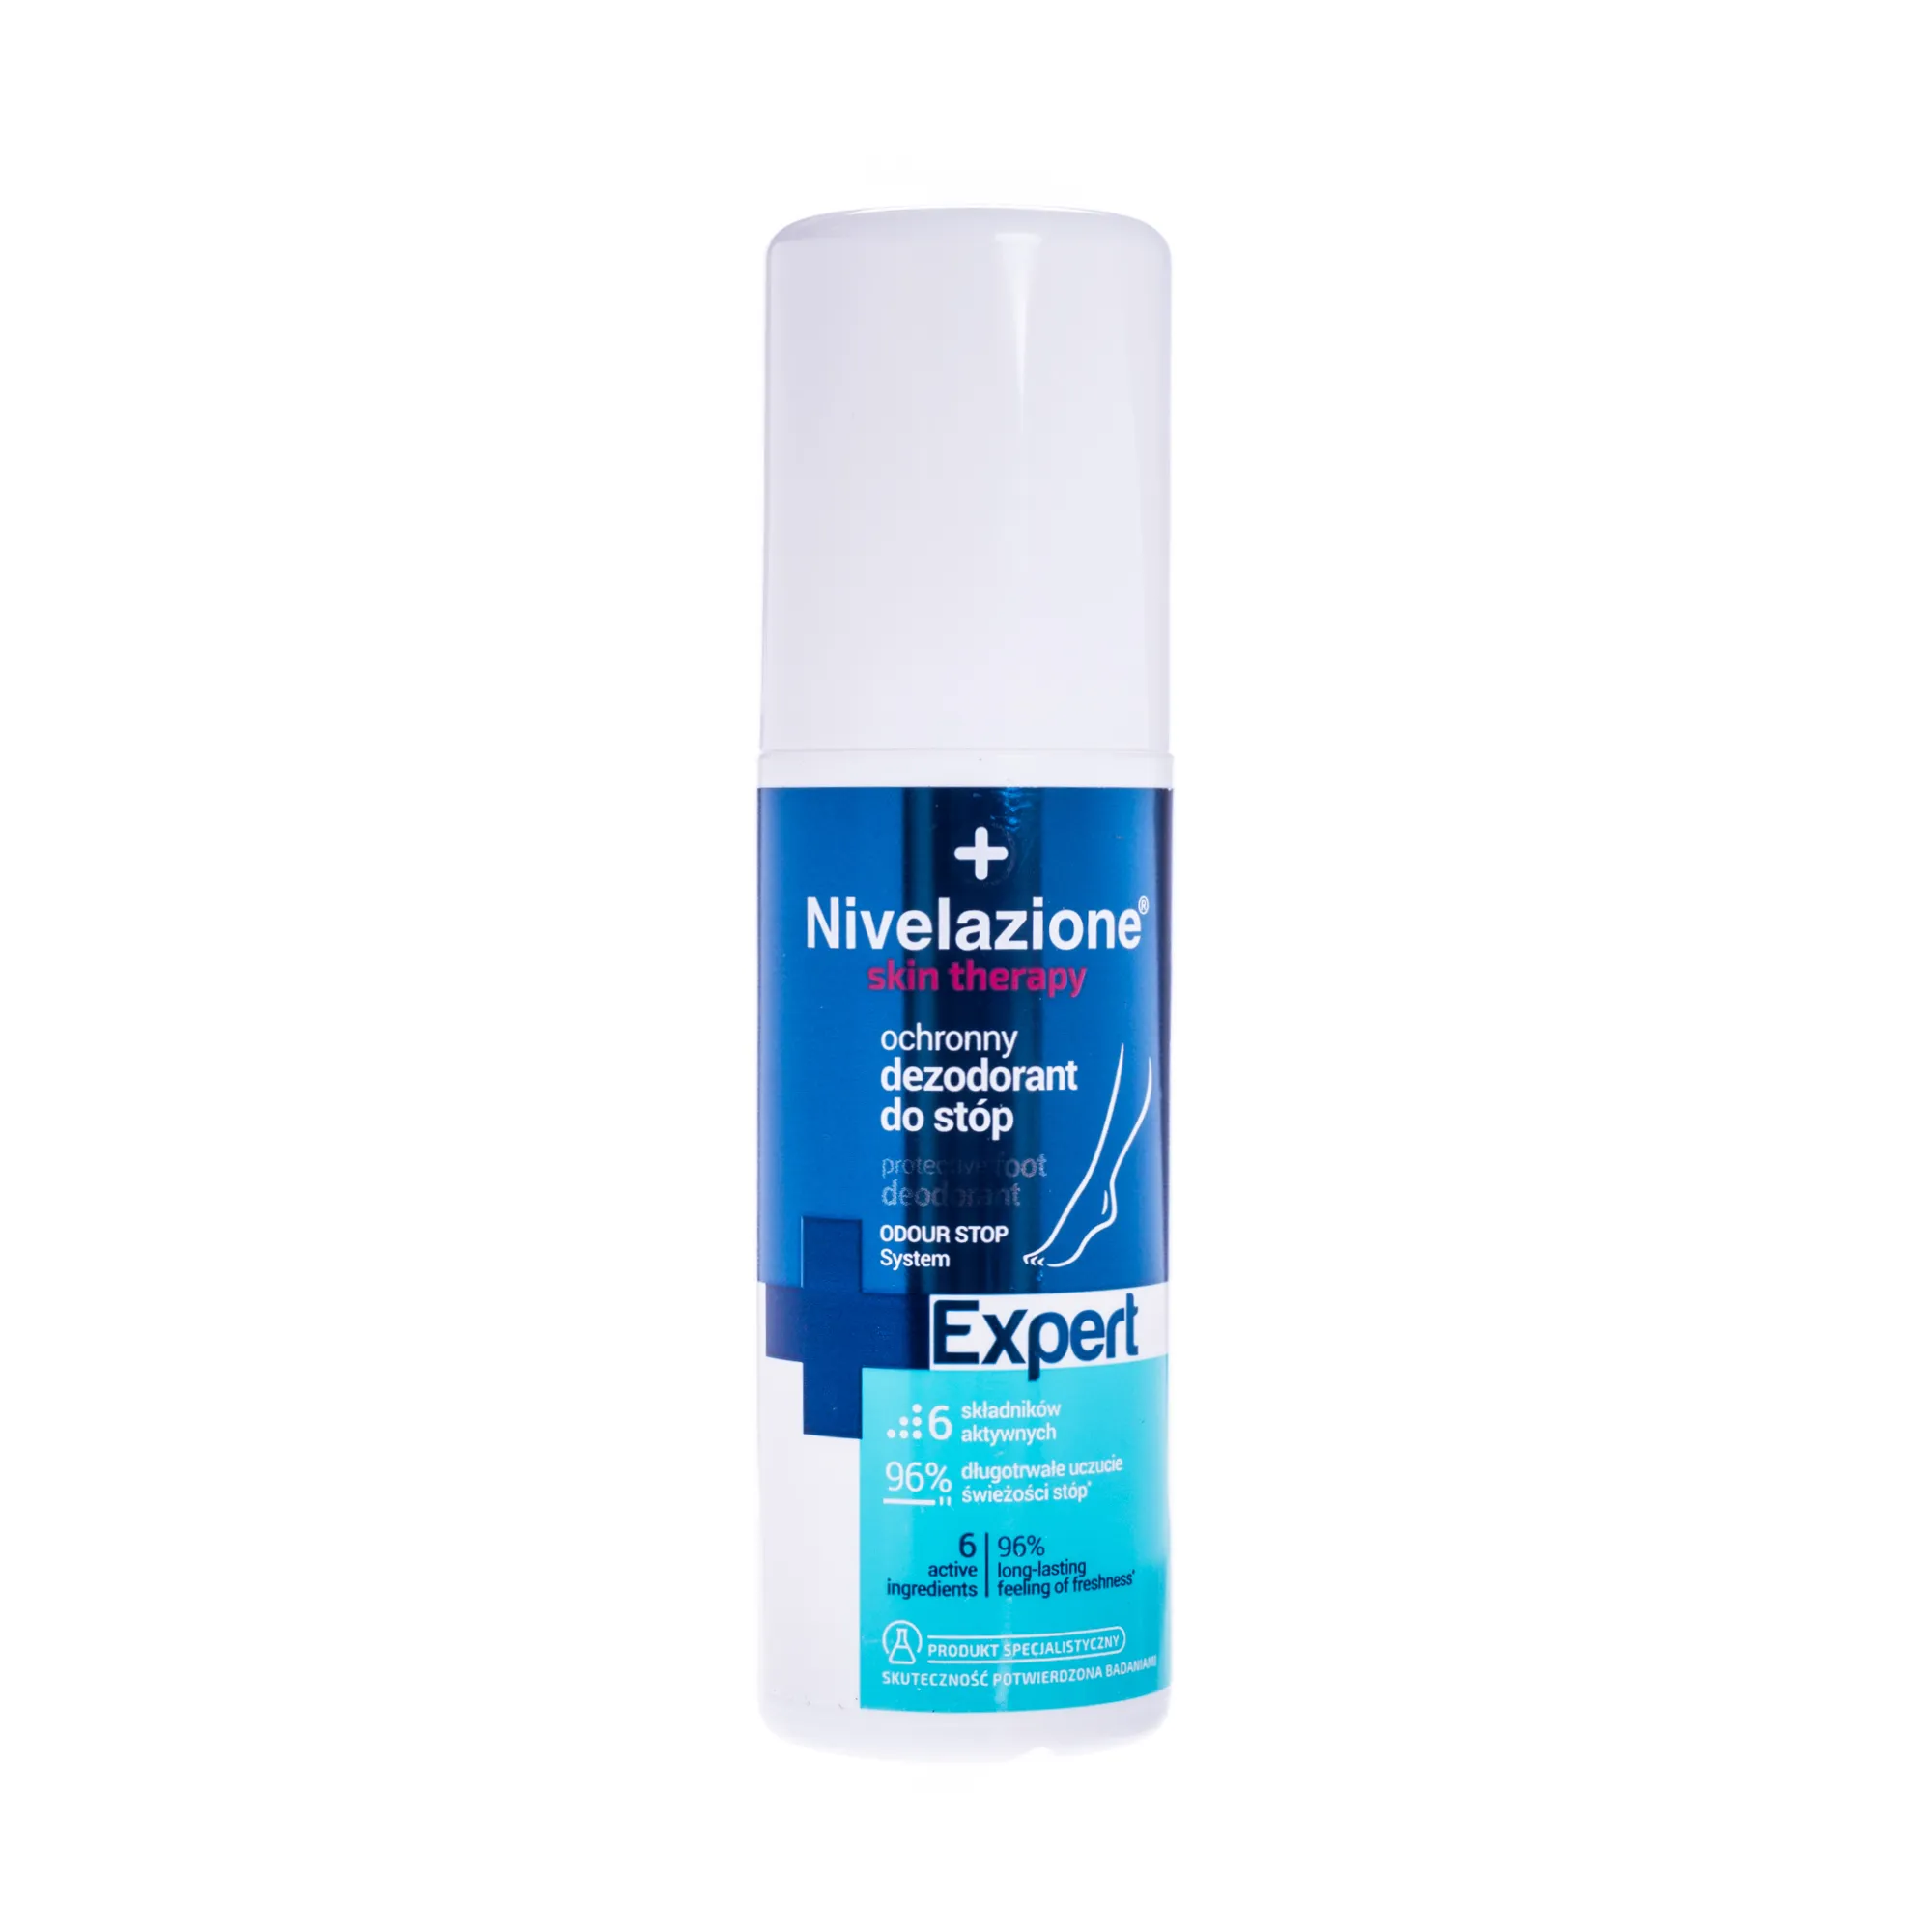 Nivelazione skin therapy Expert Ochronny dezodorant do stóp , 125 ml